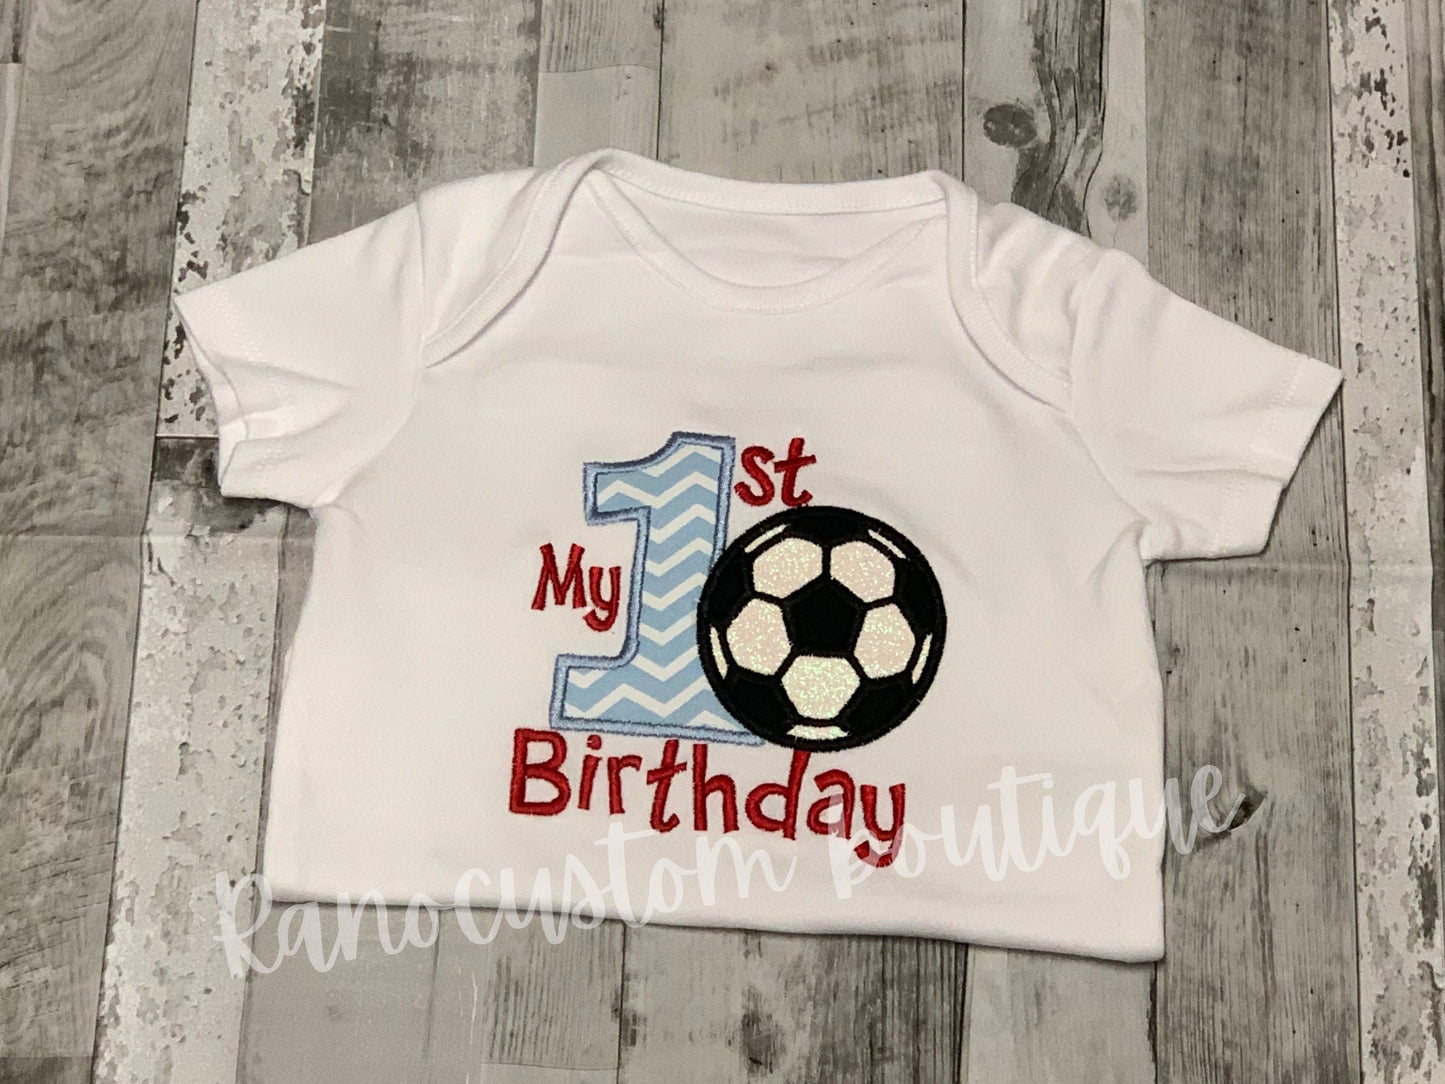 Embroidered Boy's Birthday Shirt, Boy's Embroidered Clothing, Football Themed Boy's Shirt, Custom Boys Shirt